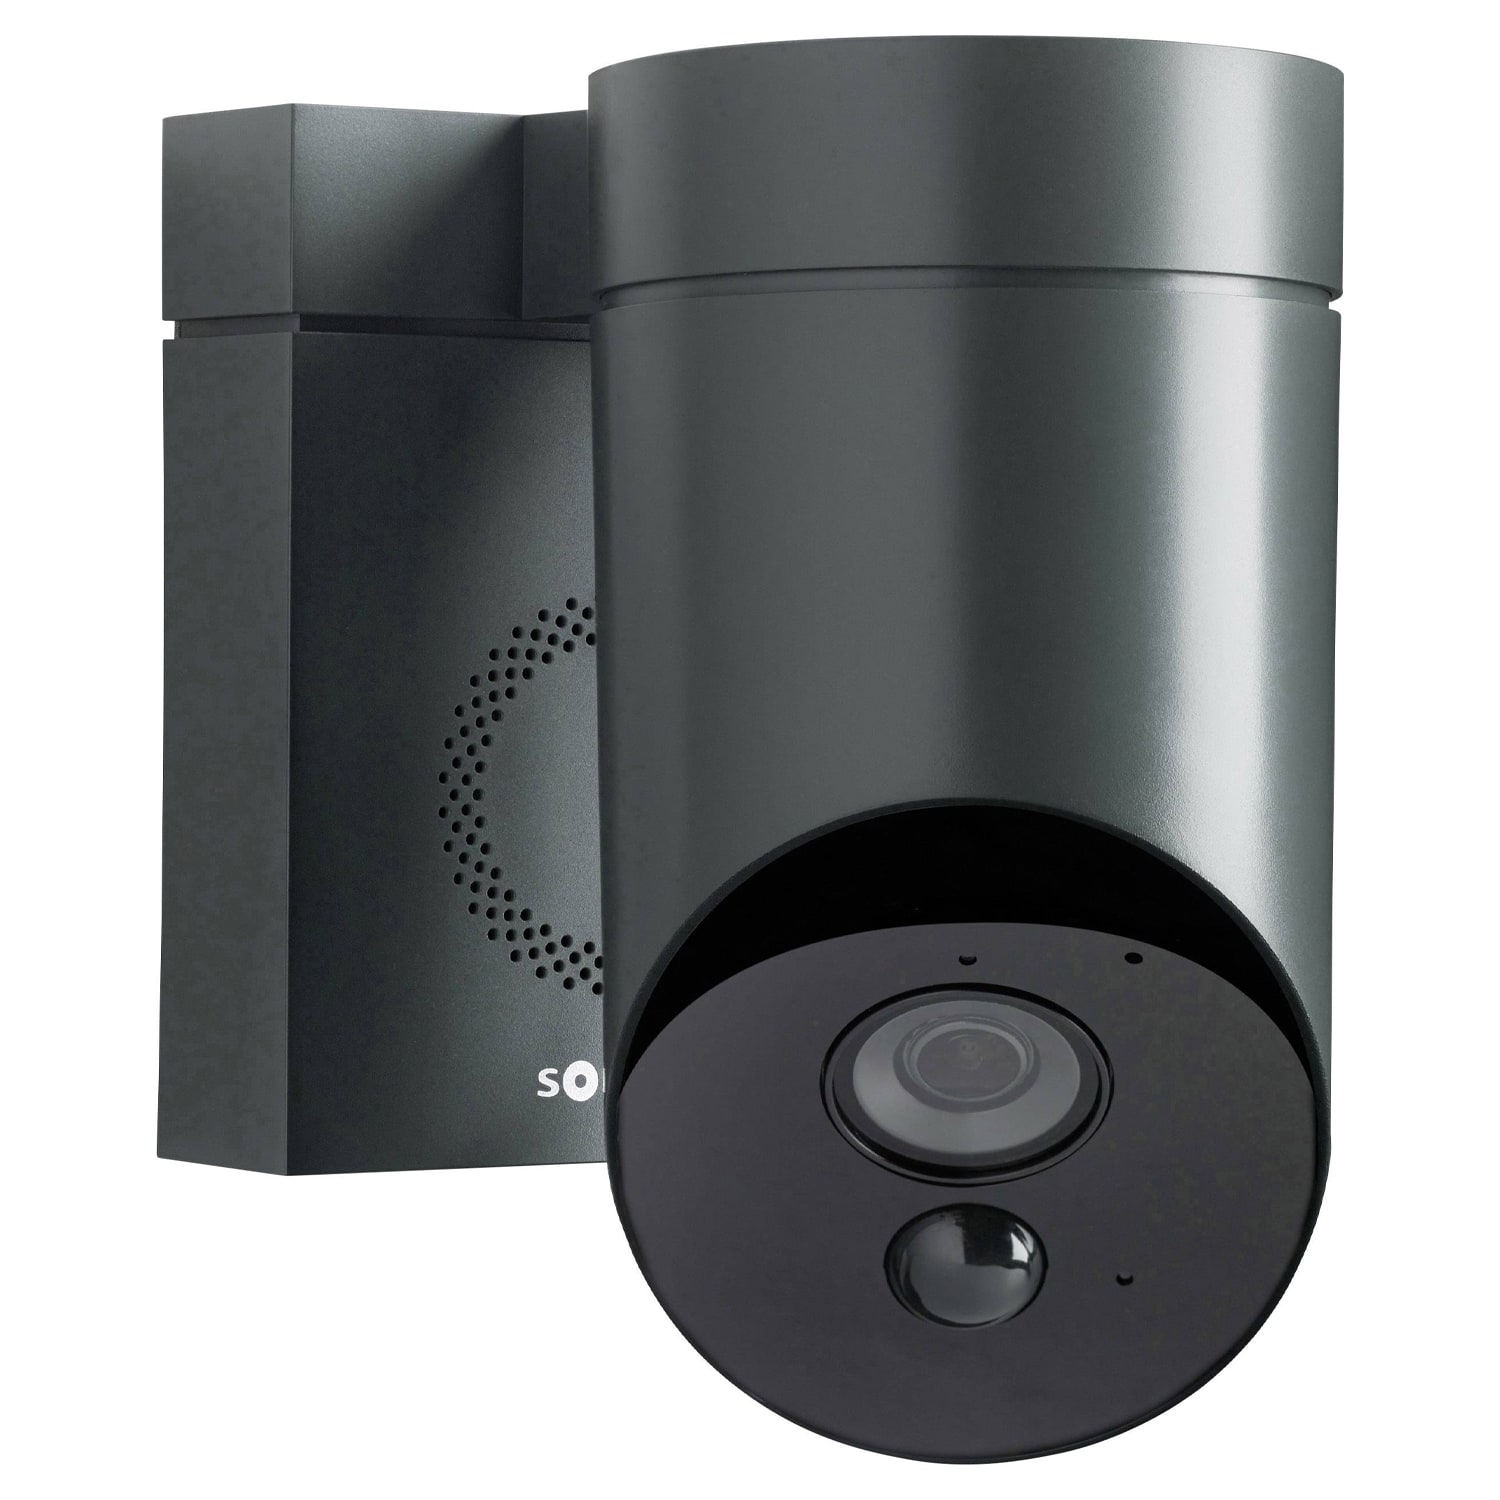 Somfy Outdoor Security Camera - Black - Smart & Secure Centre